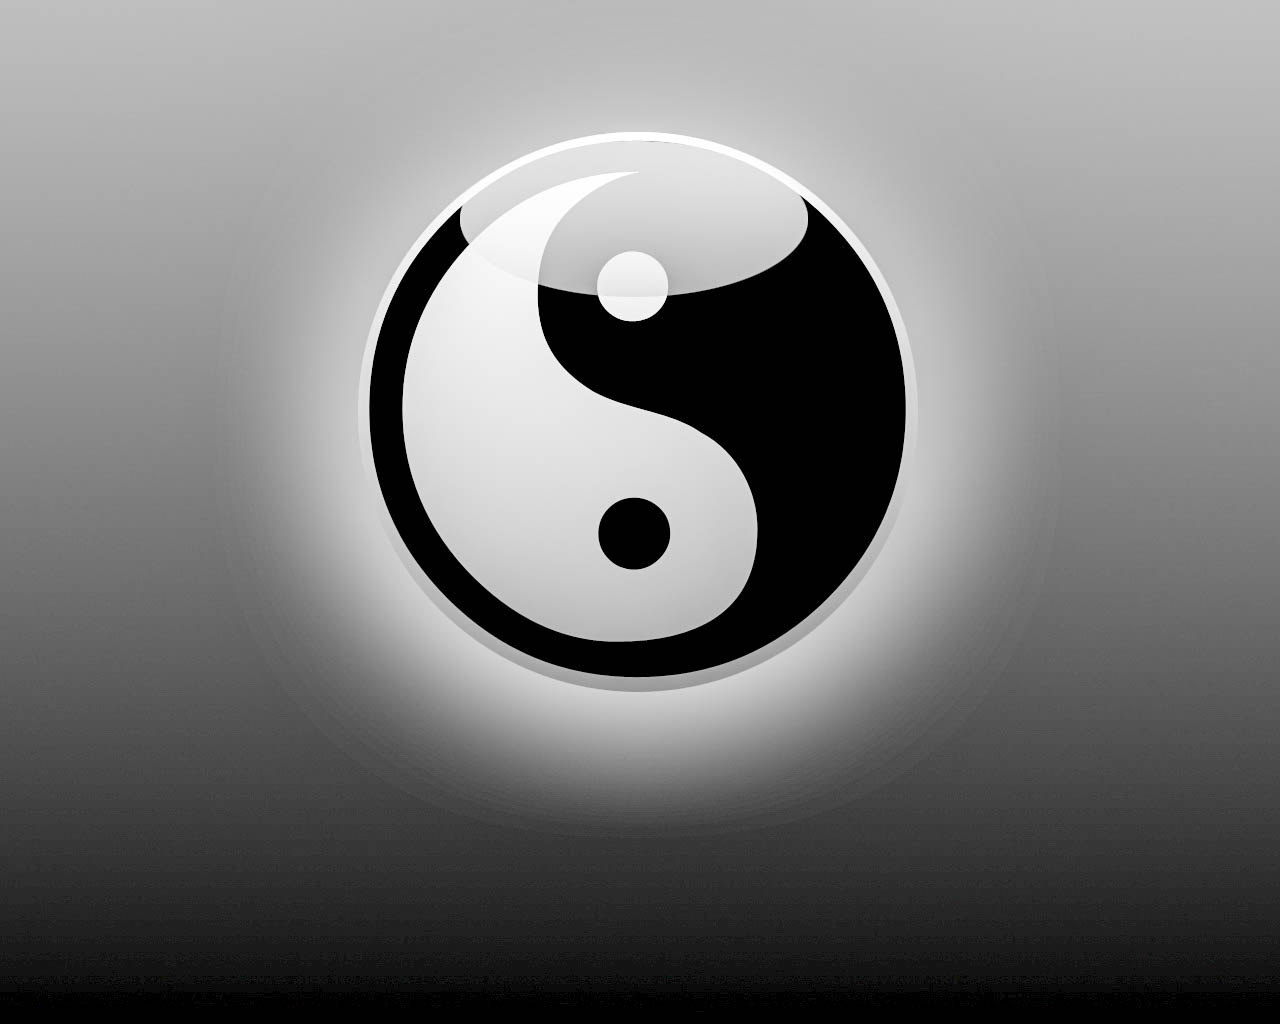 yin yang wallpaper hd,symbol,schwarz und weiß,kreis,symbol,grafik